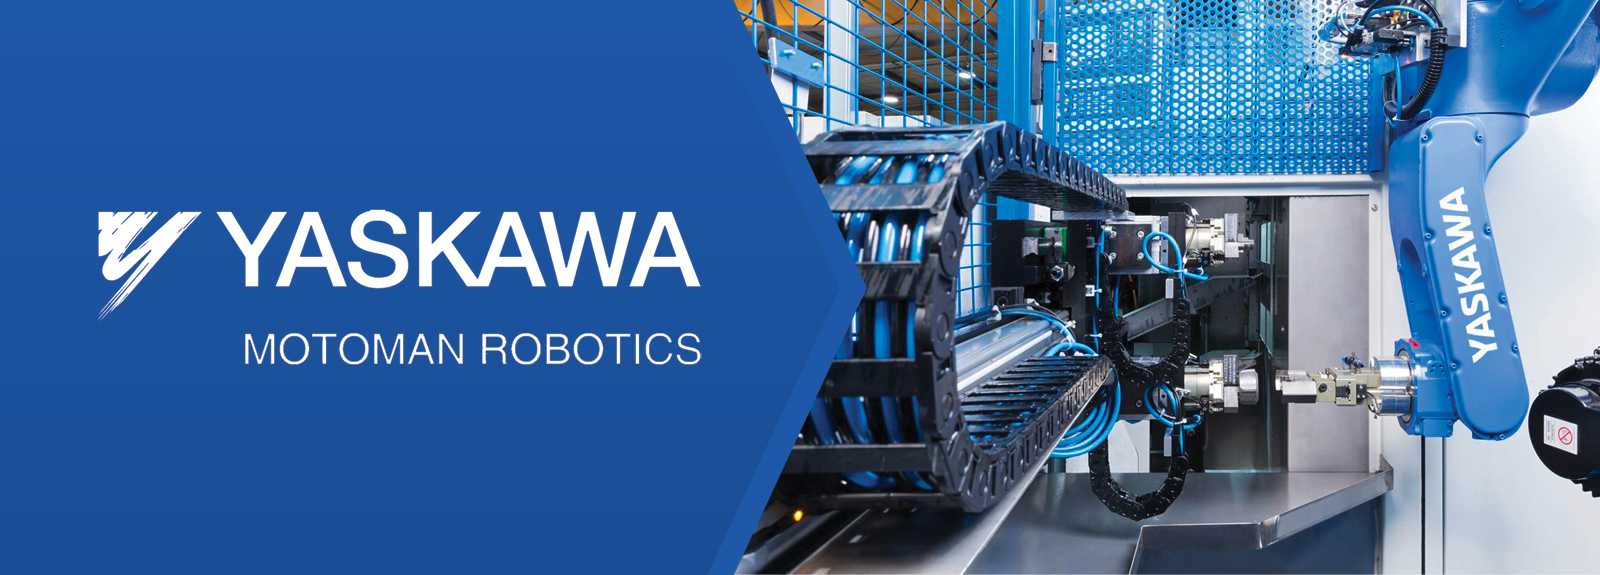 welding-robot-manufacturers-Yaskawa